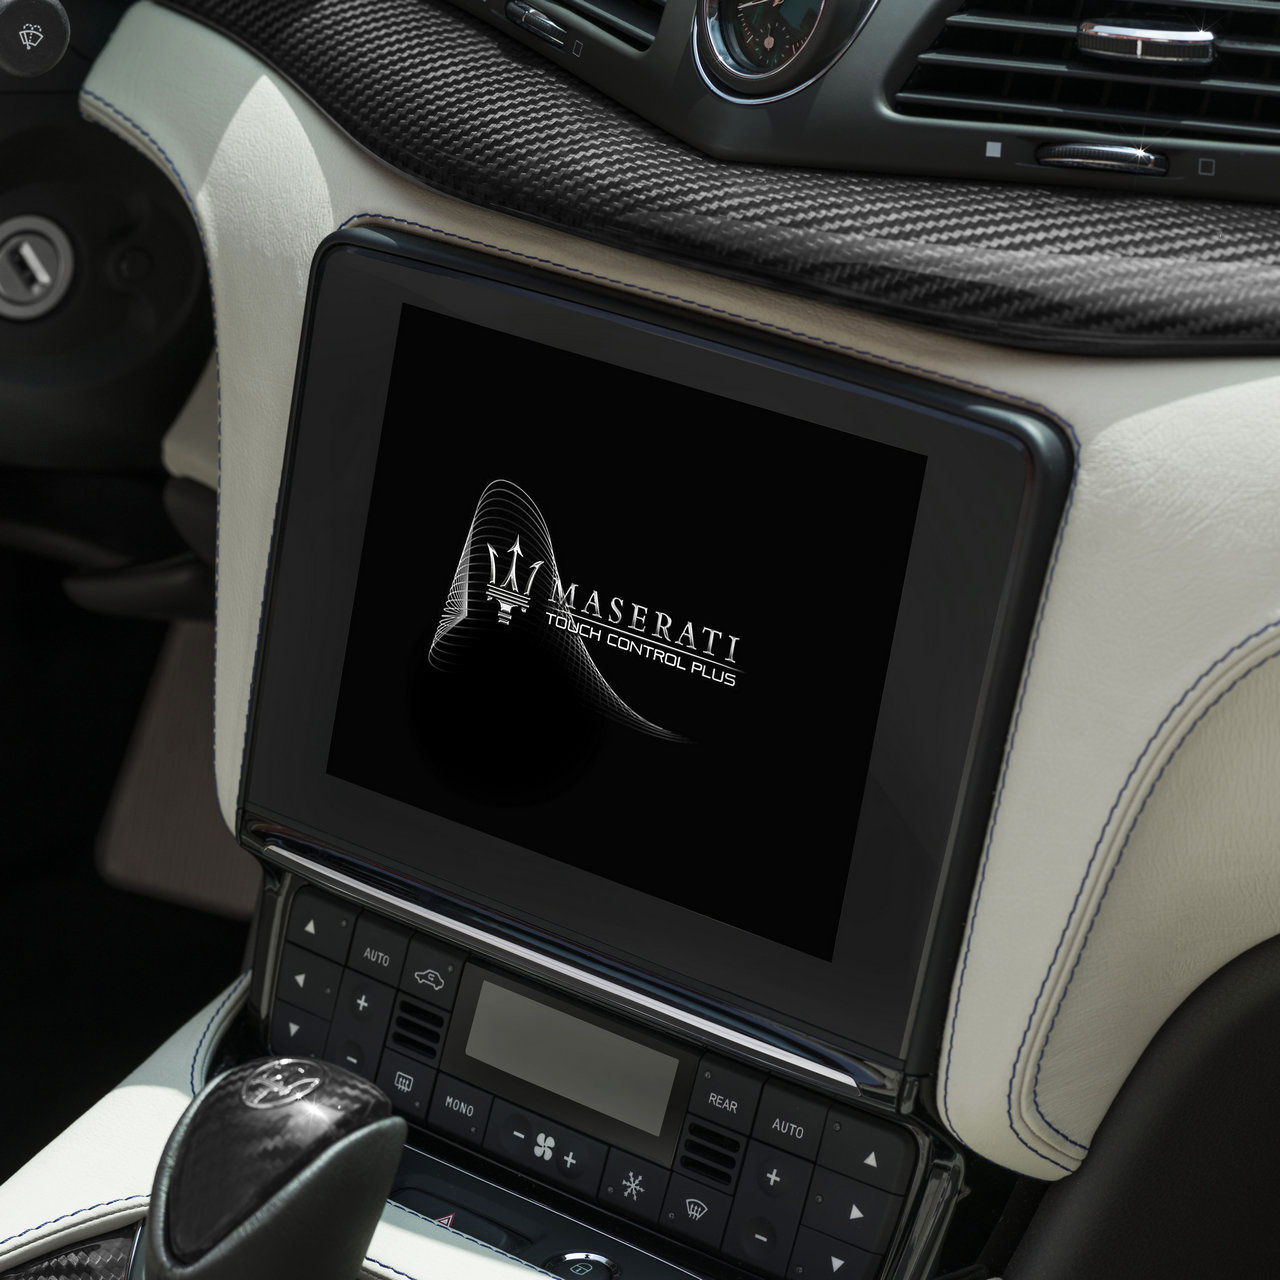 Maserati GranCabrio - luxury interiors' details and touchscreen display